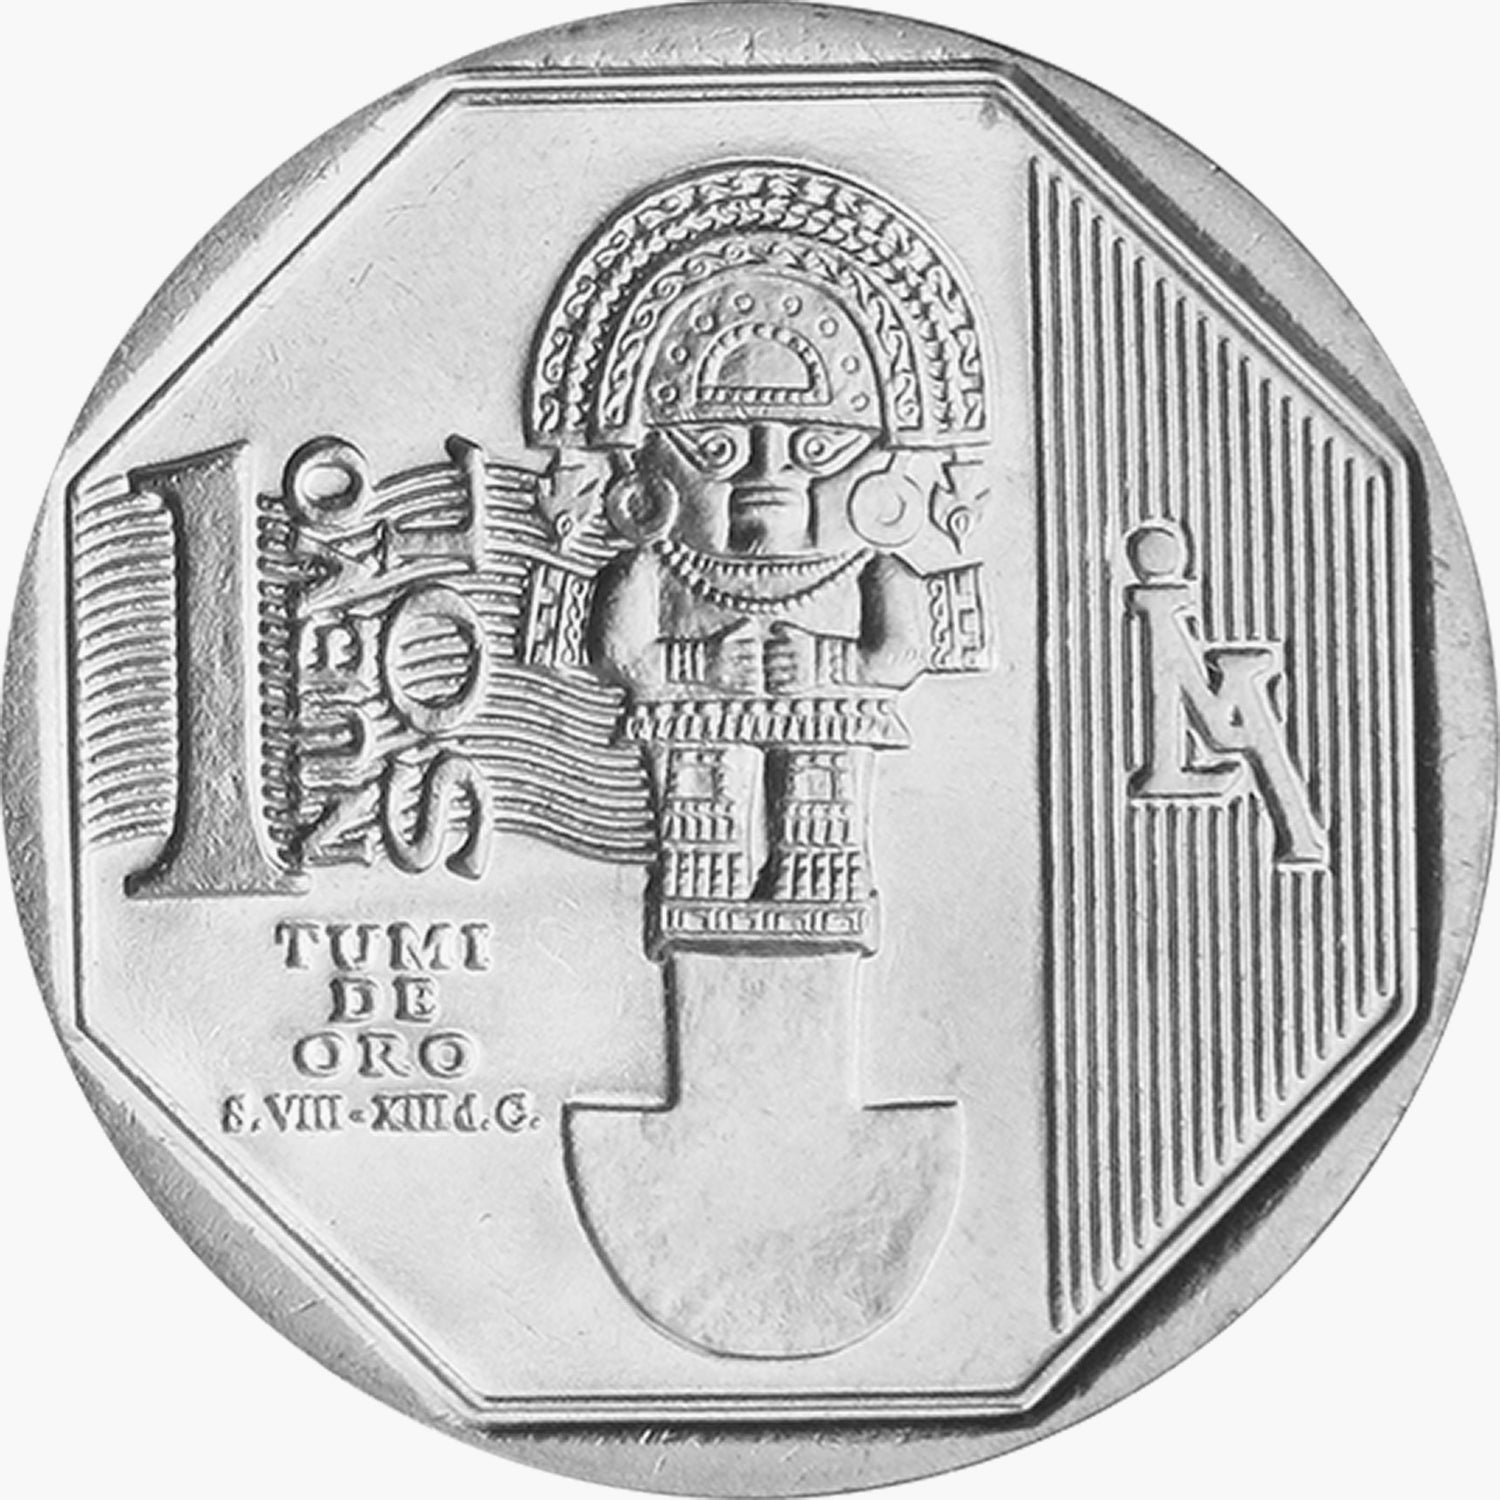 Commemorative Coin Series ‚ÄûWealth and Pride of Peru‚Äù